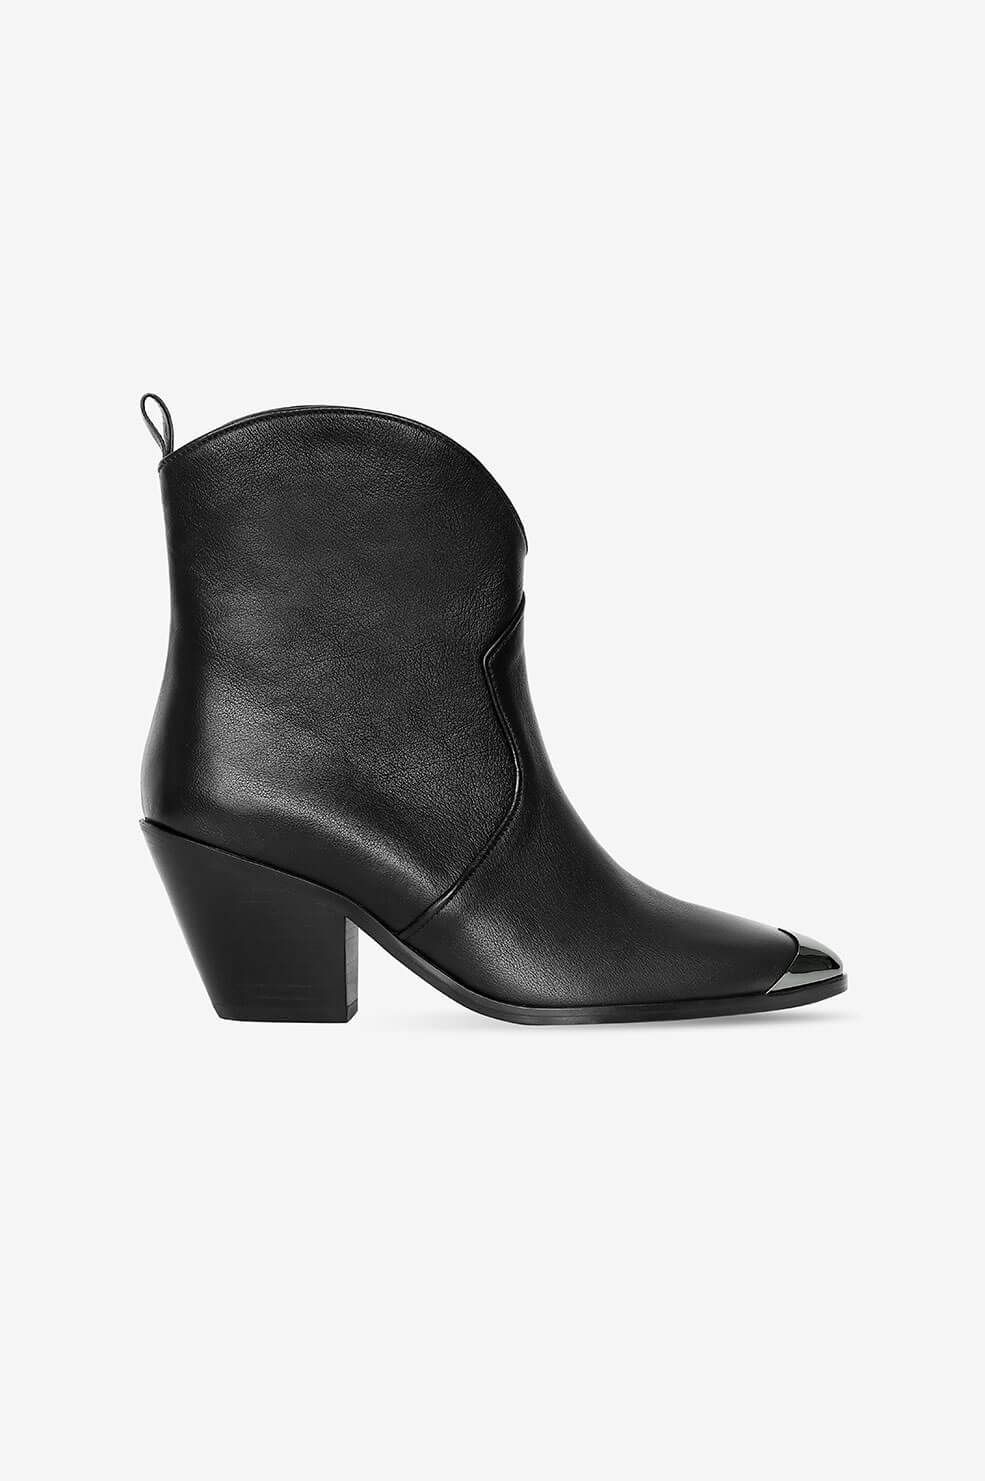 Easton Boots - Black with Metal Toe Cap | ANINE BING